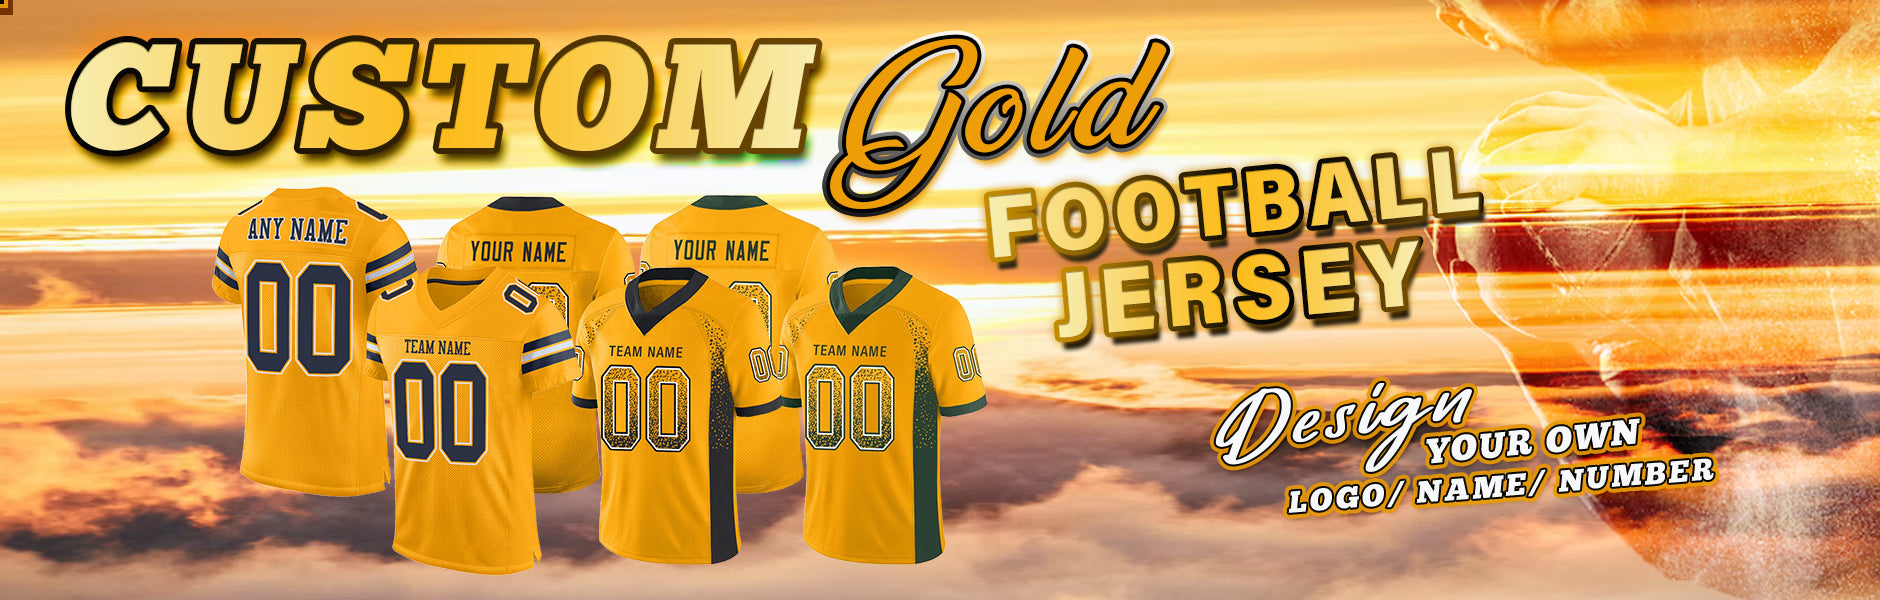 custom football gold jersey